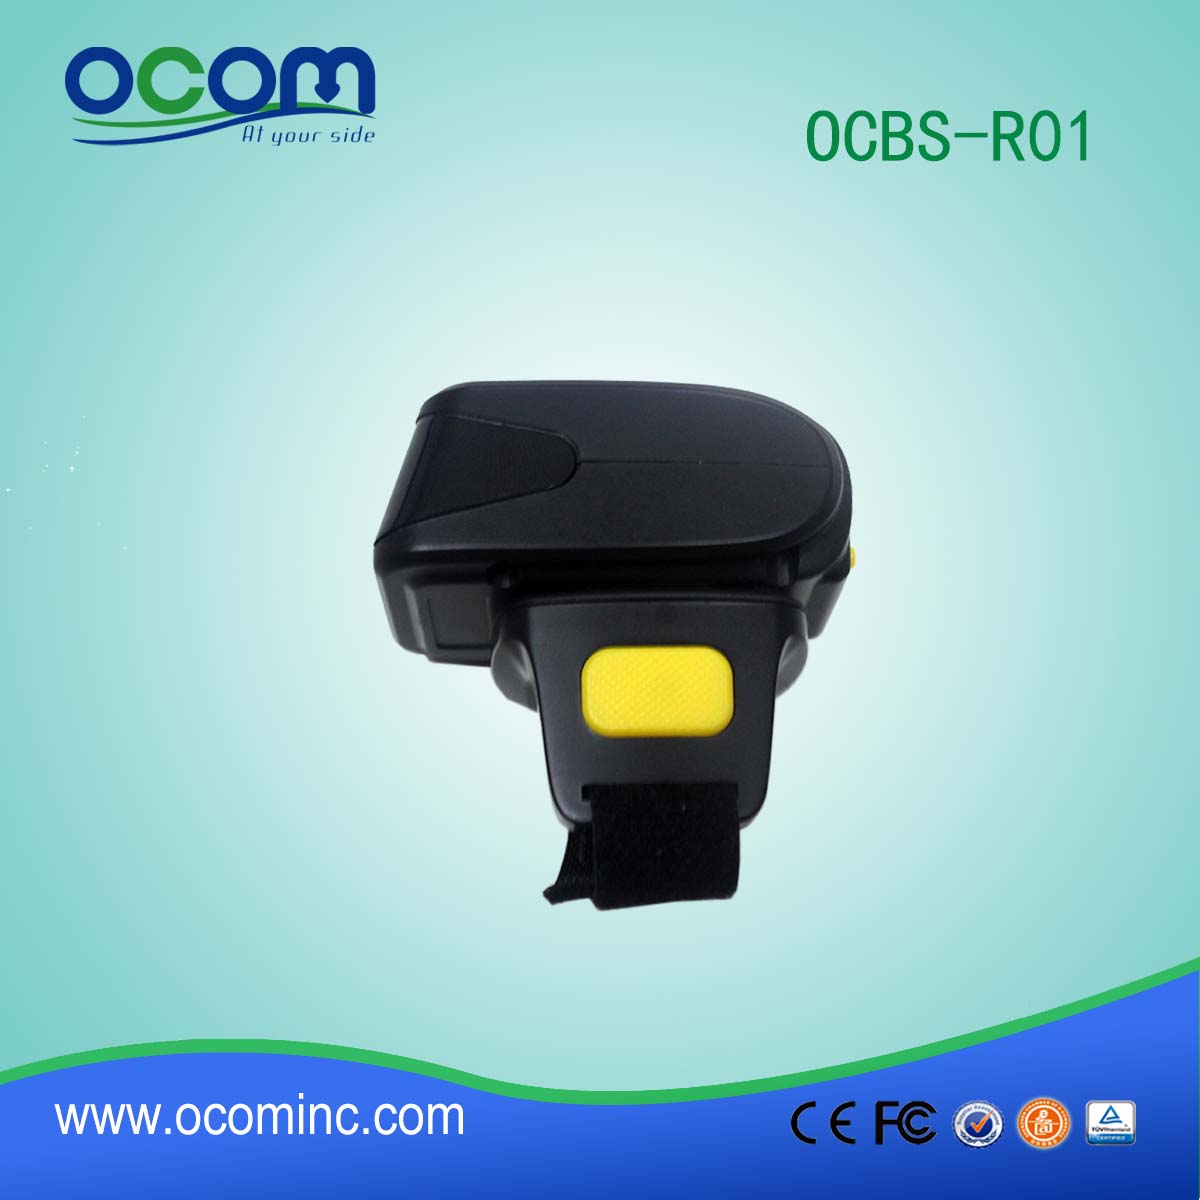 OCBs-R01 1D ασύρματο bluetooth scanner barcode